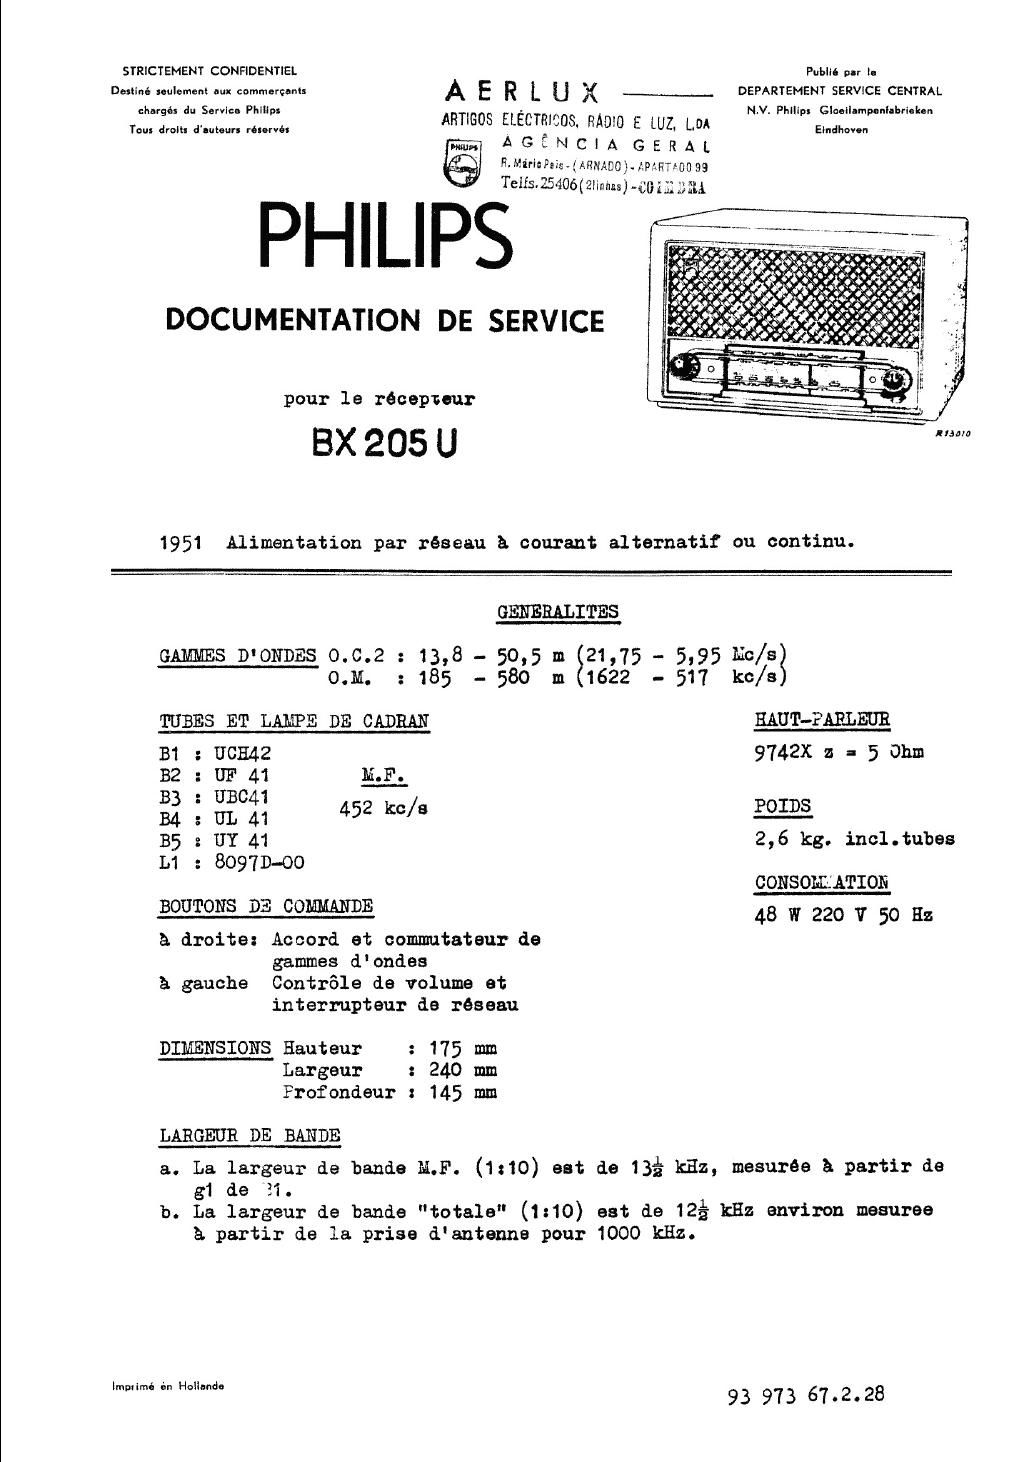 philips bx 205 u service manual